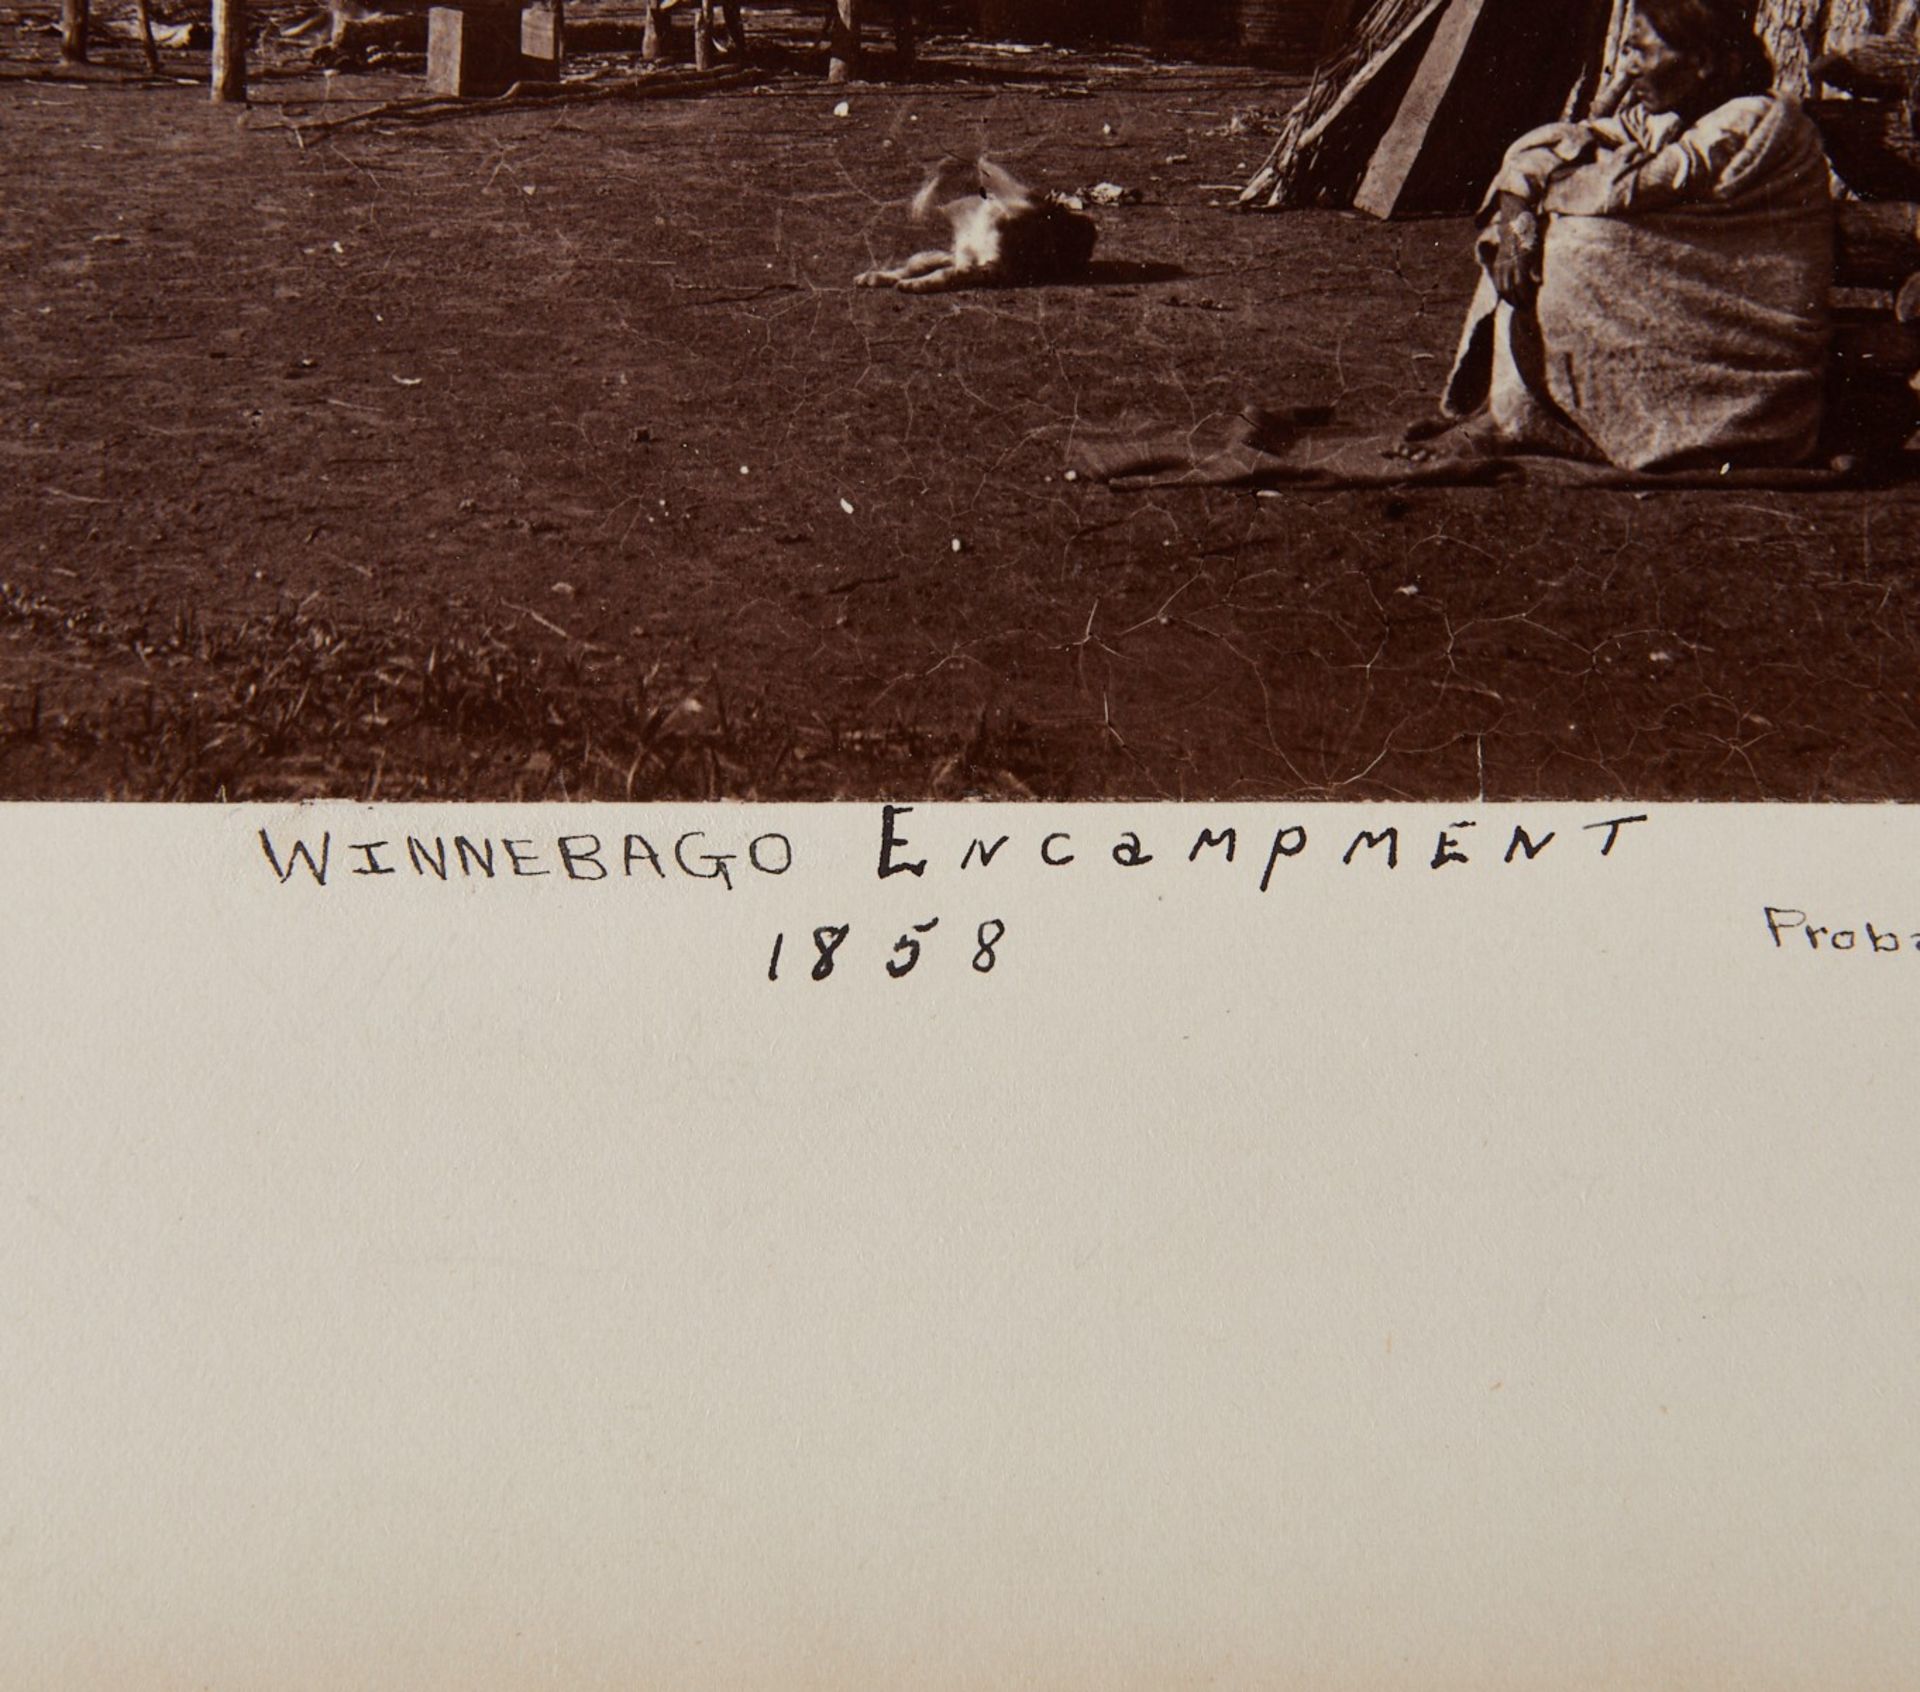 Benjamin Upton Winnebago Encampment 1858 Photograph - Bild 4 aus 7